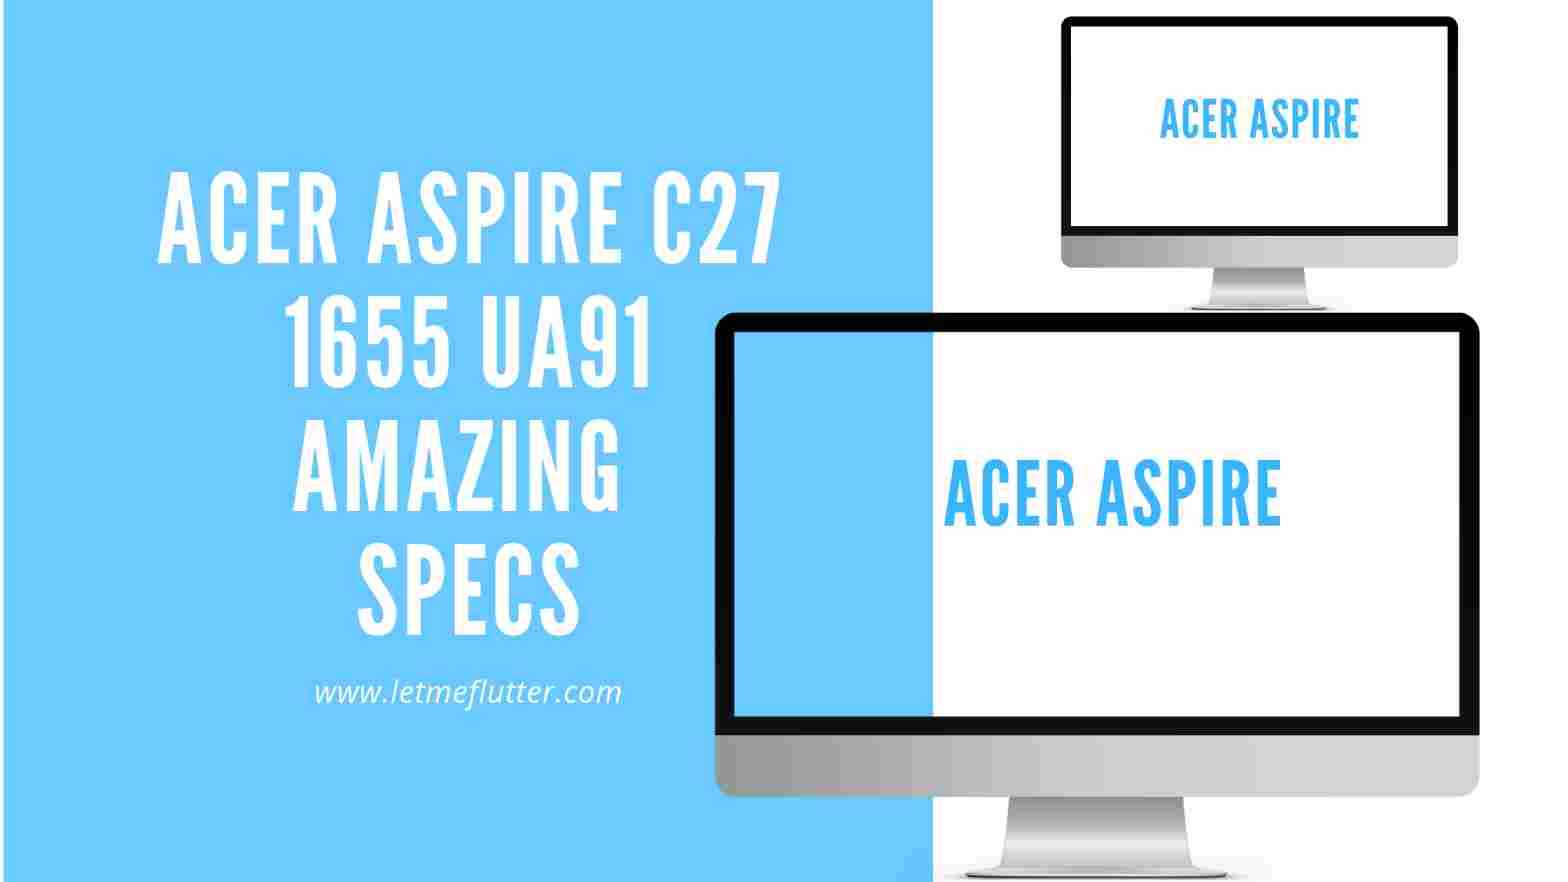 Acer Aspire C27 1655 UA91 aIl in one desktop PC